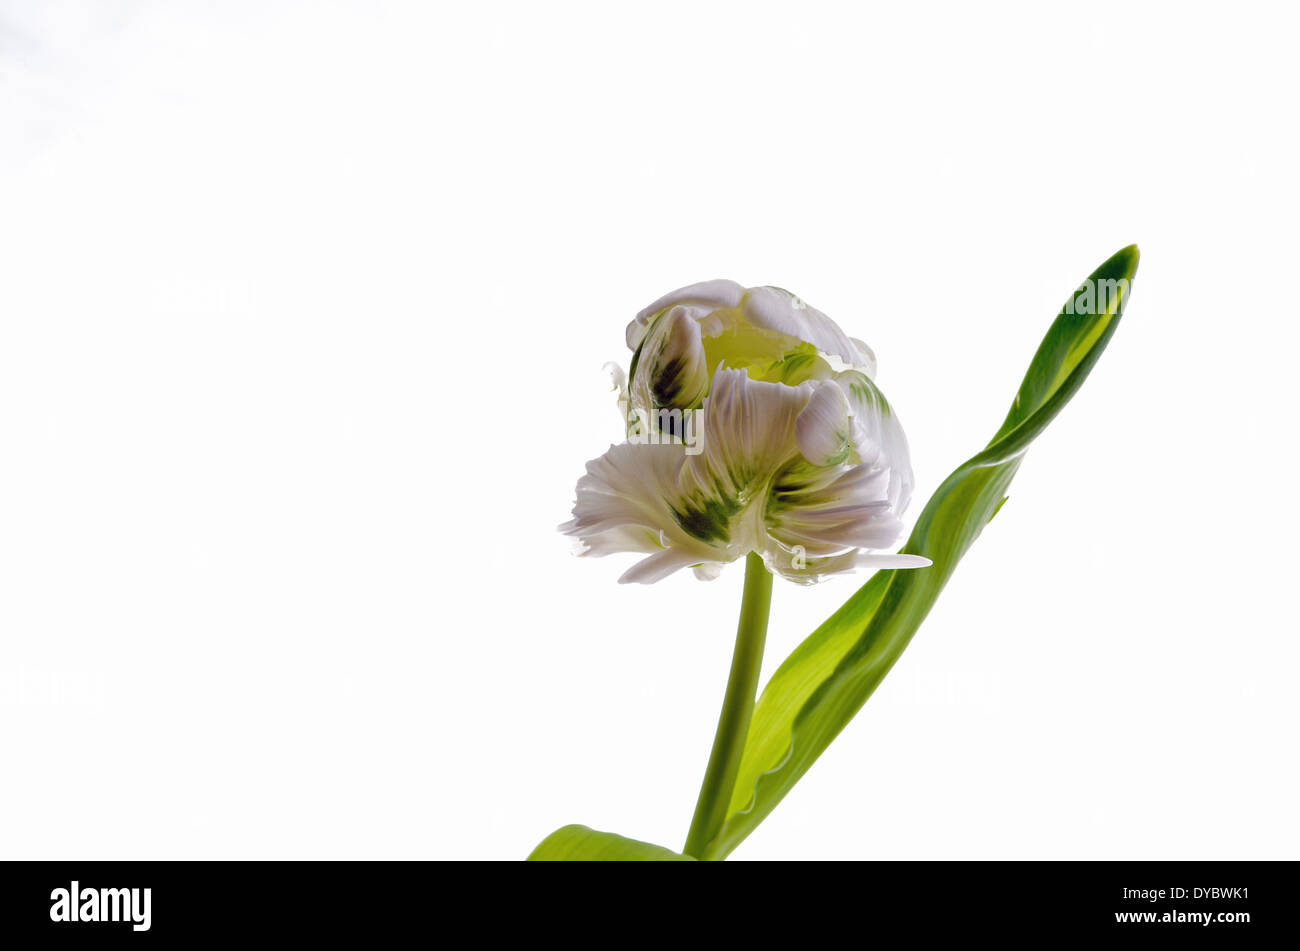 Photo of tulip on a white background Stock Photo